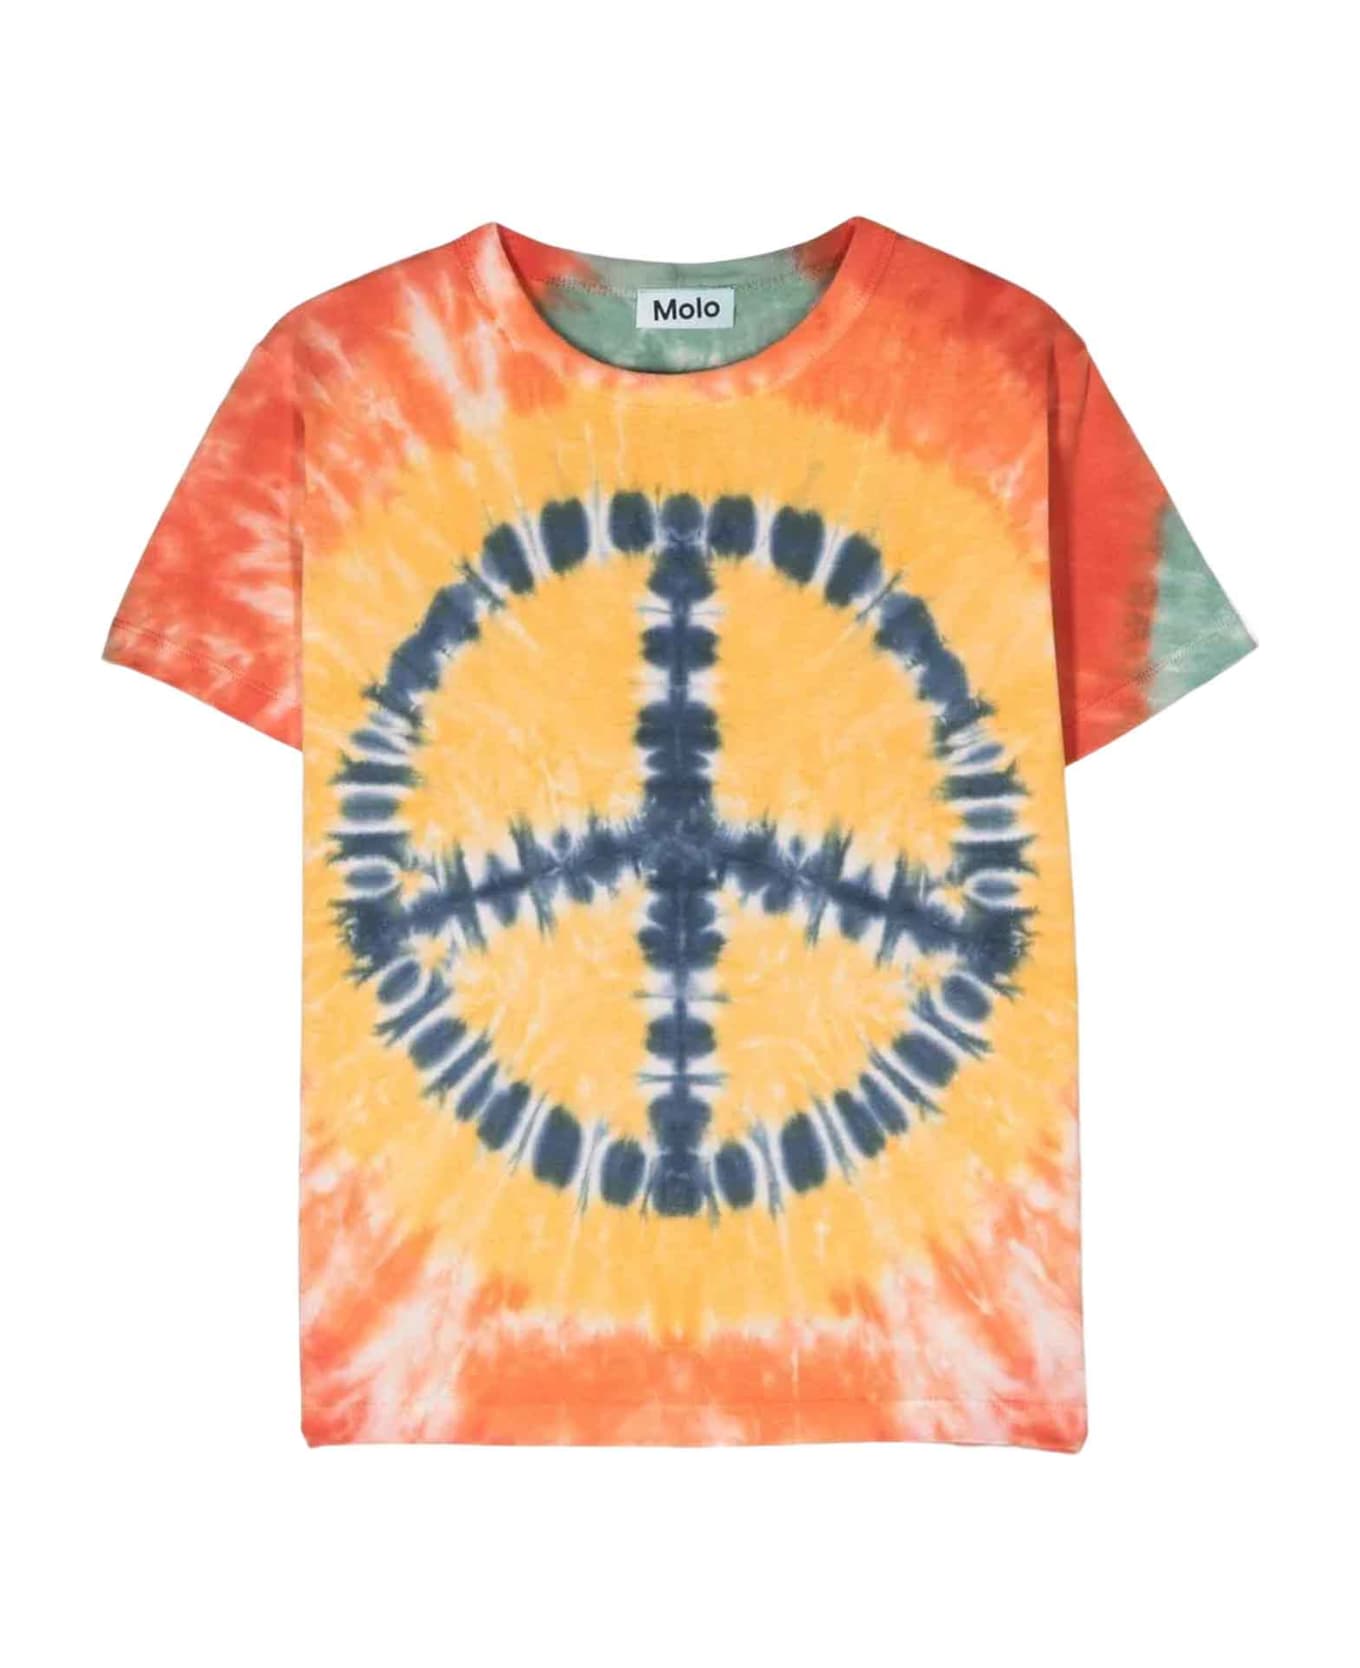 Molo Multicolor T-shirt Unisex Kids - Multicolor